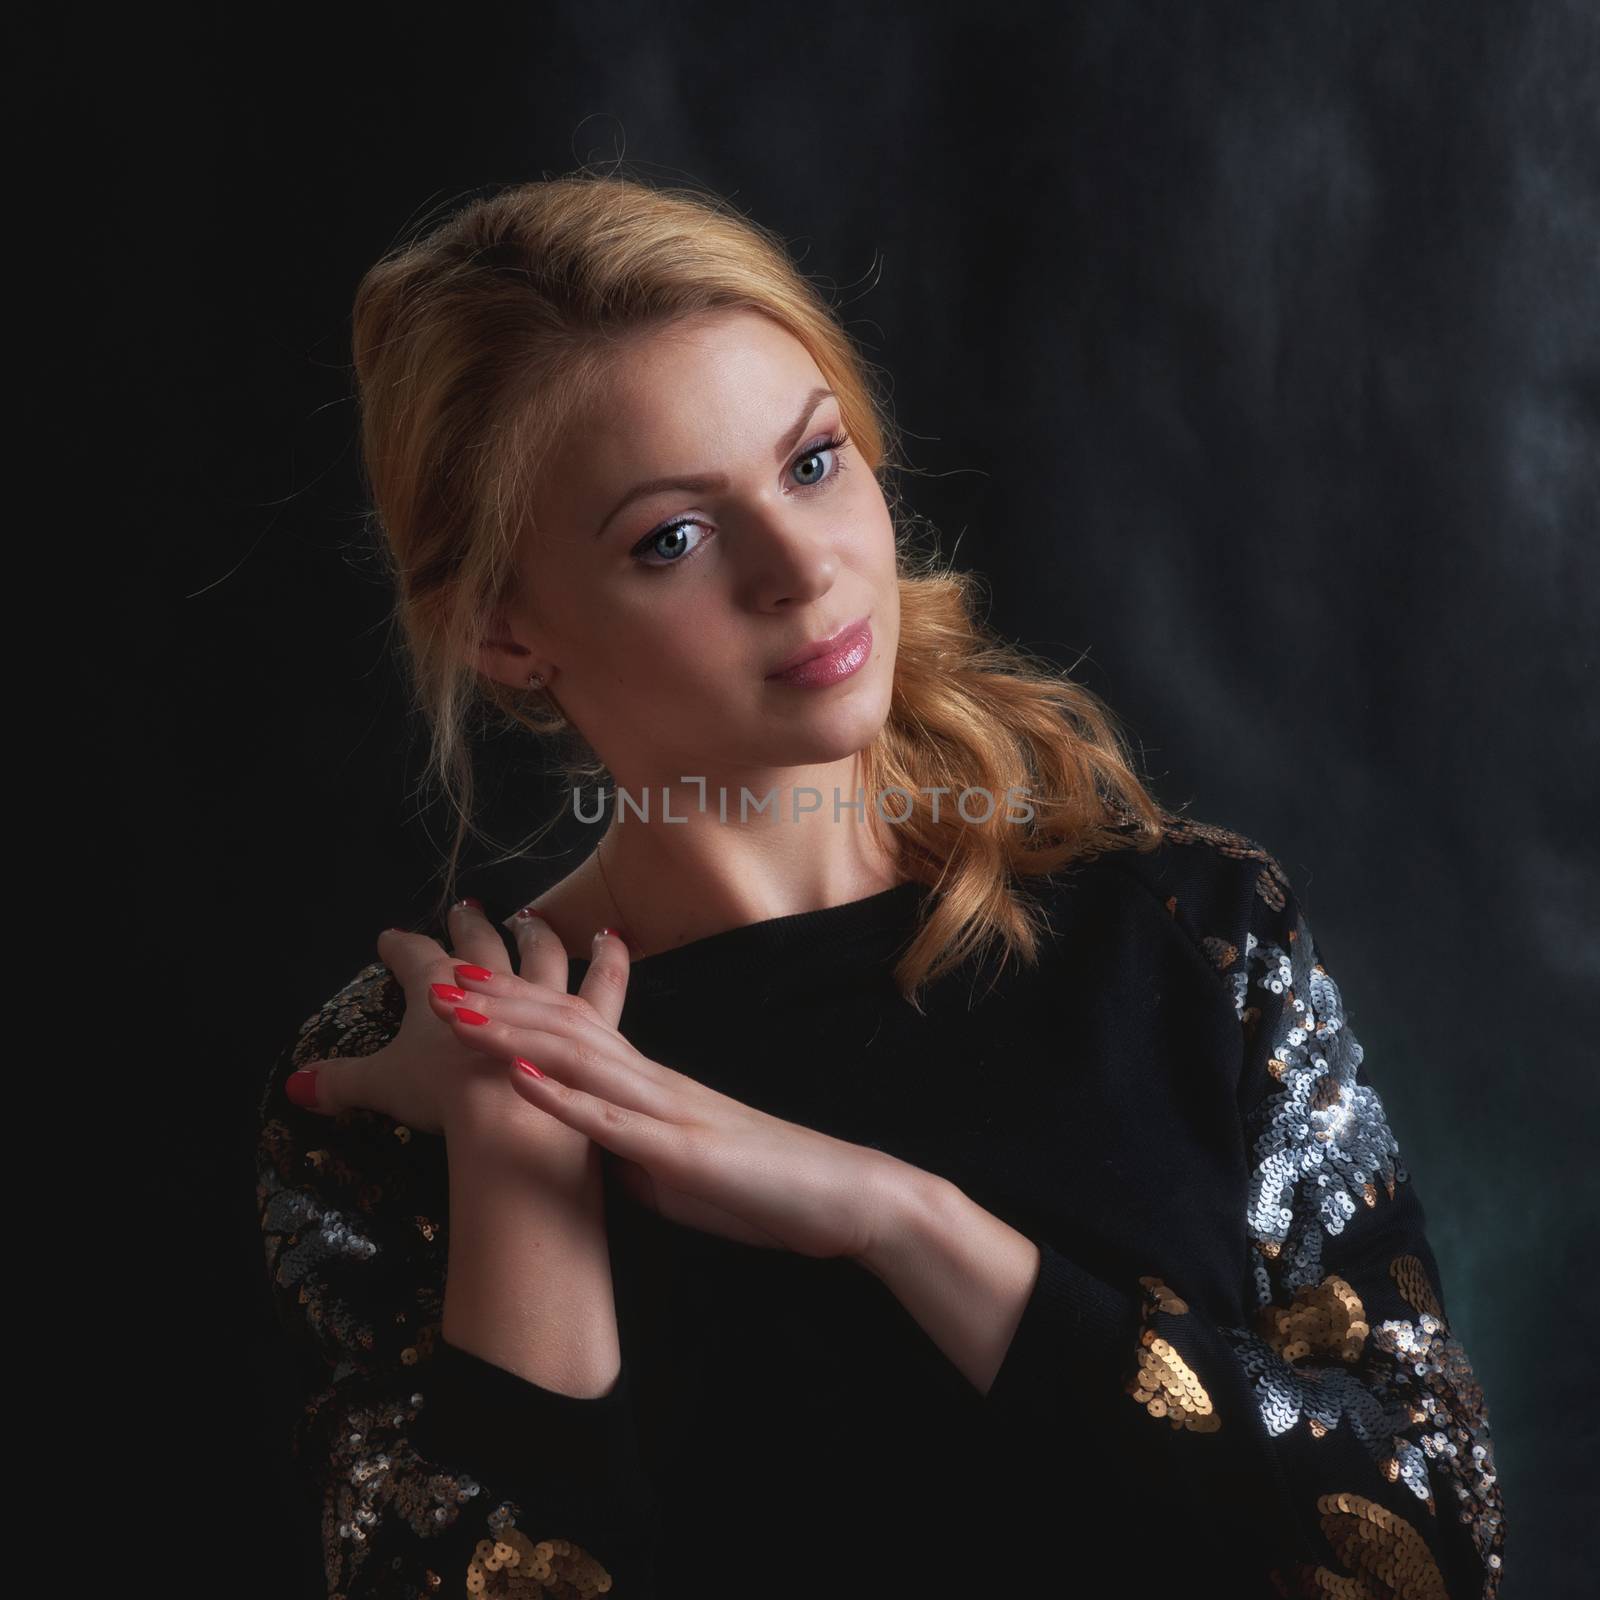 Blonde girl against a dark background by fotooxotnik